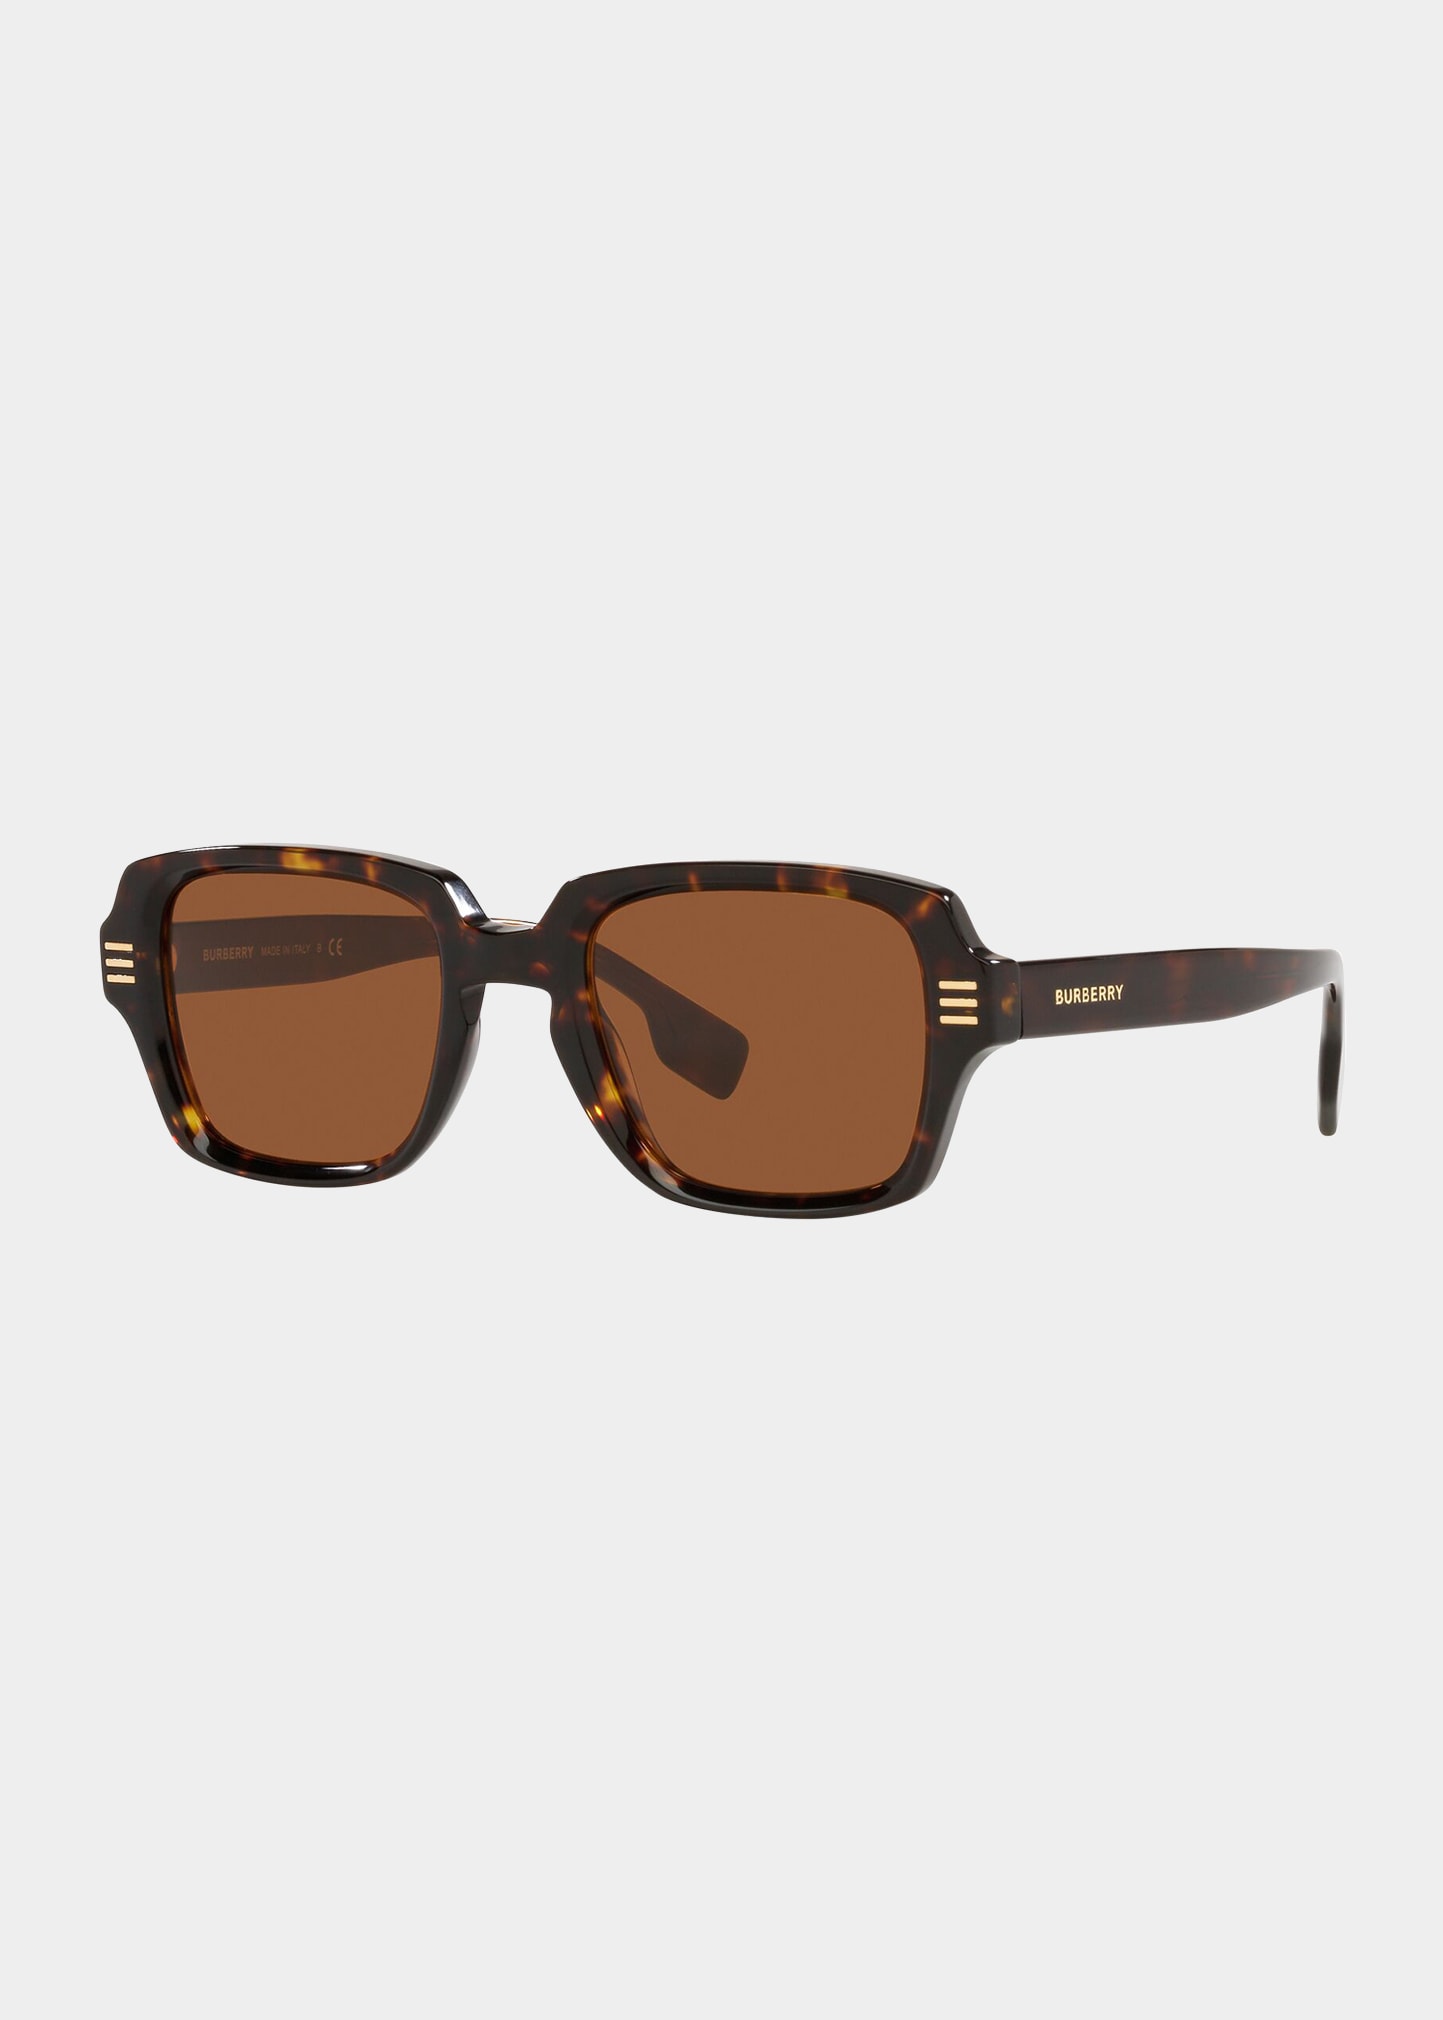 Burberry Men's Rectangle Acetate Sunglasses In Brown Tortoise